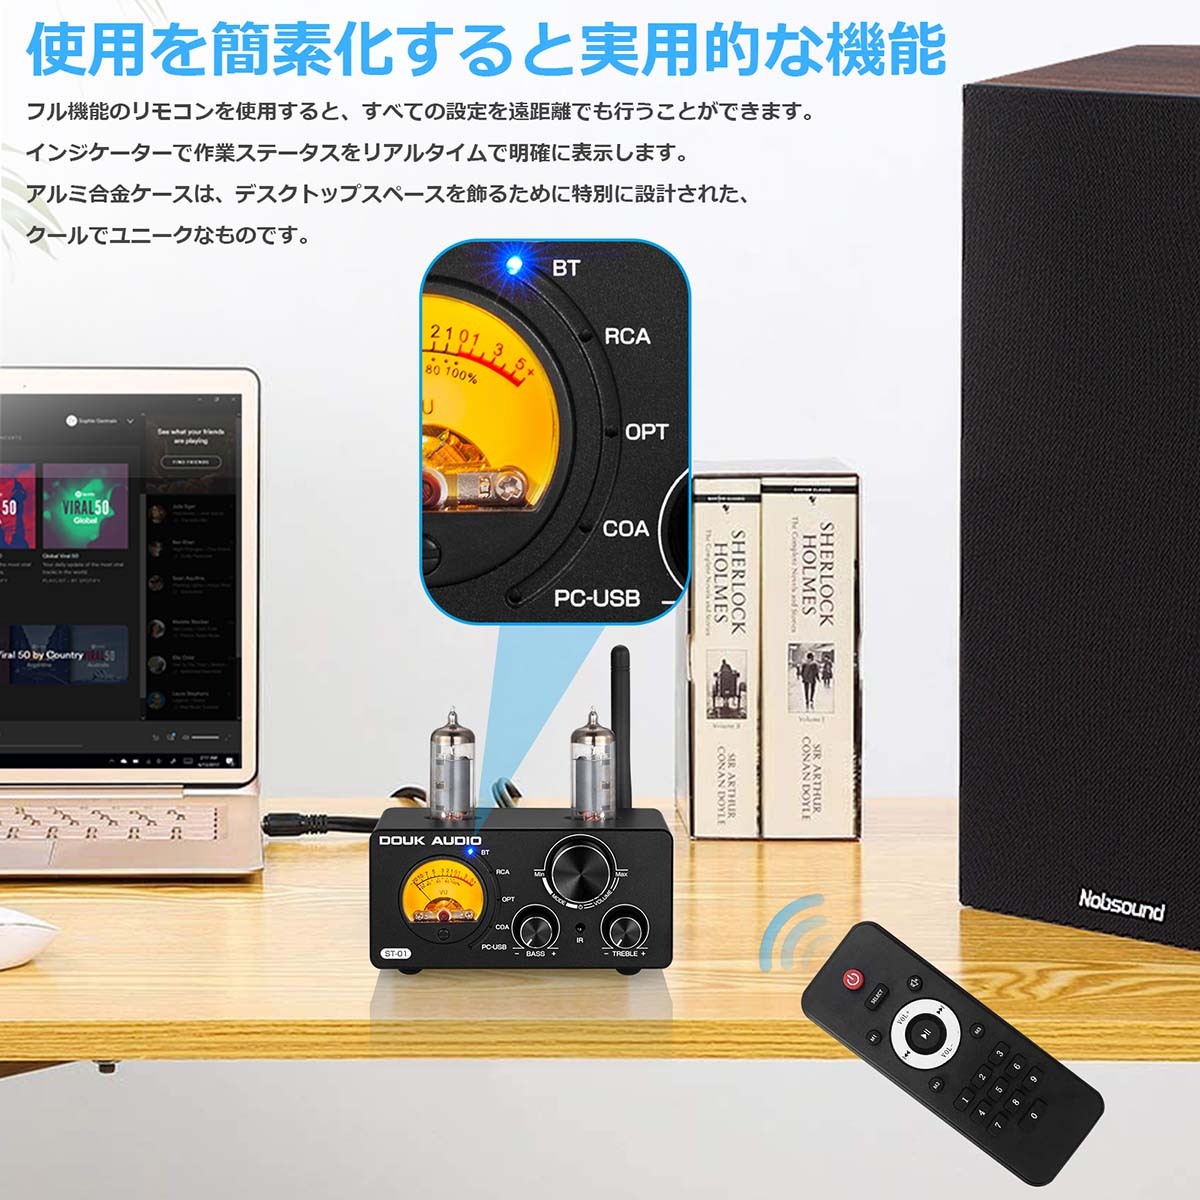 DOUK AUDIO ST-01 6K4 HiFi Bluetooth 5.0 真空管アンプ USB DAC COAX 